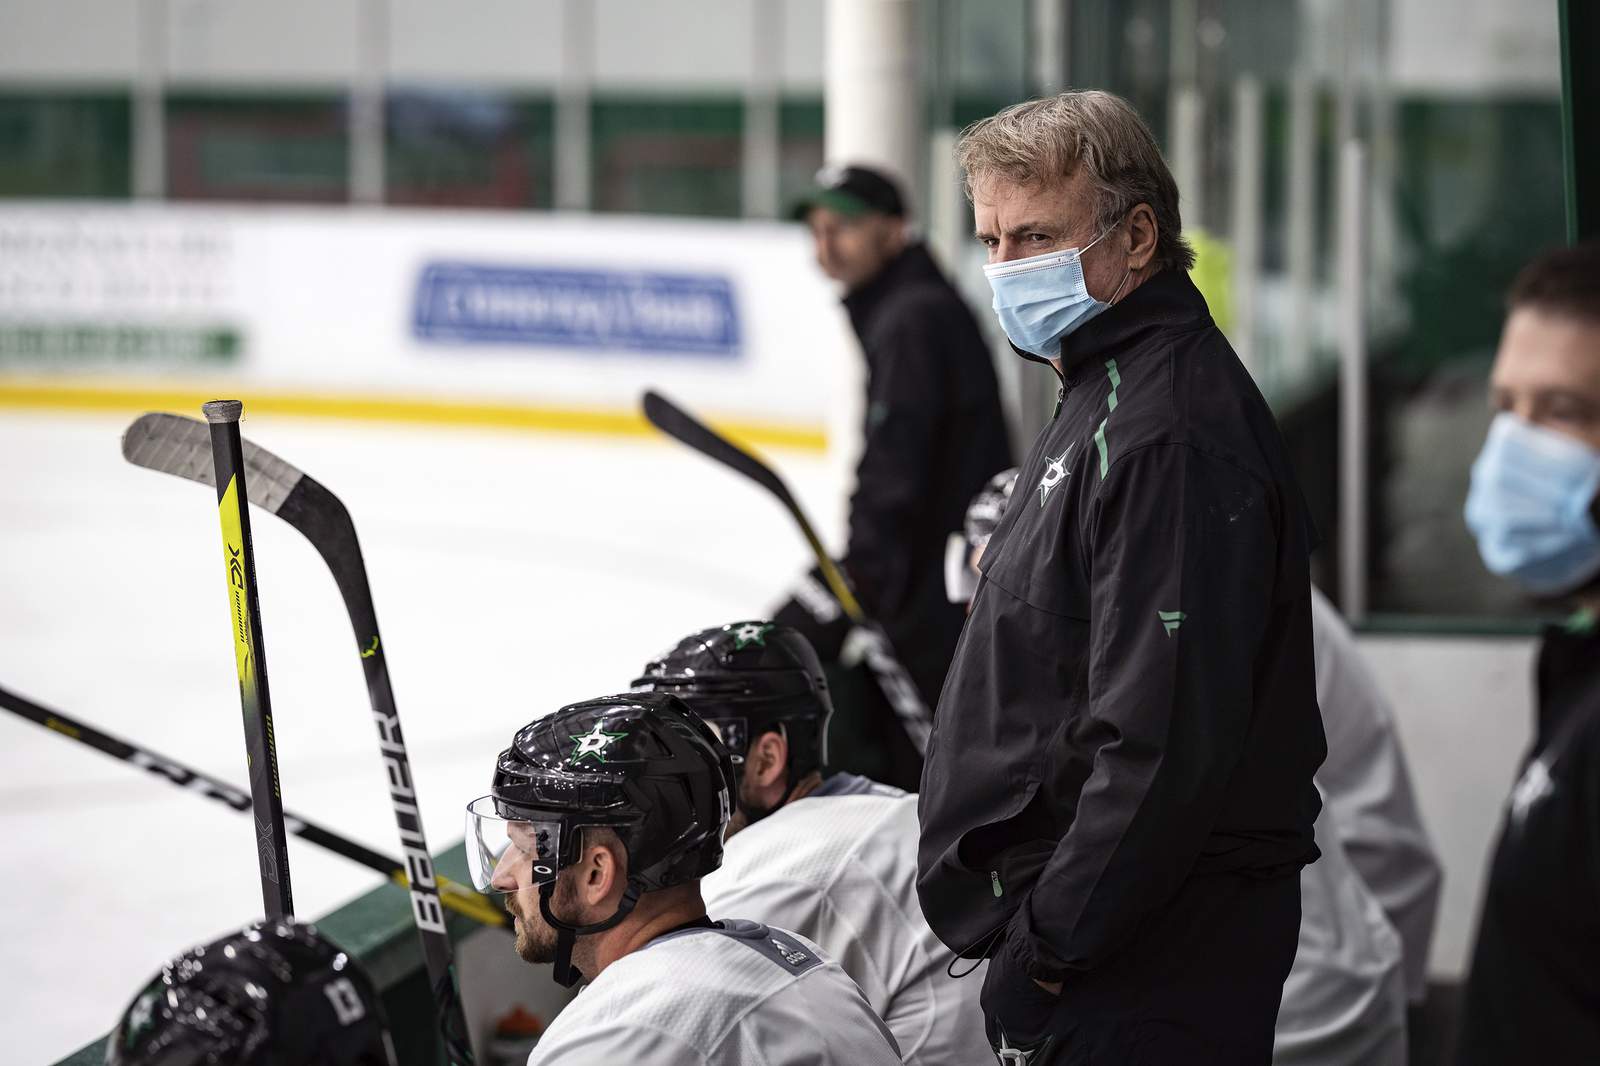 NHL's older coaches debate wearing masks, taking precautions